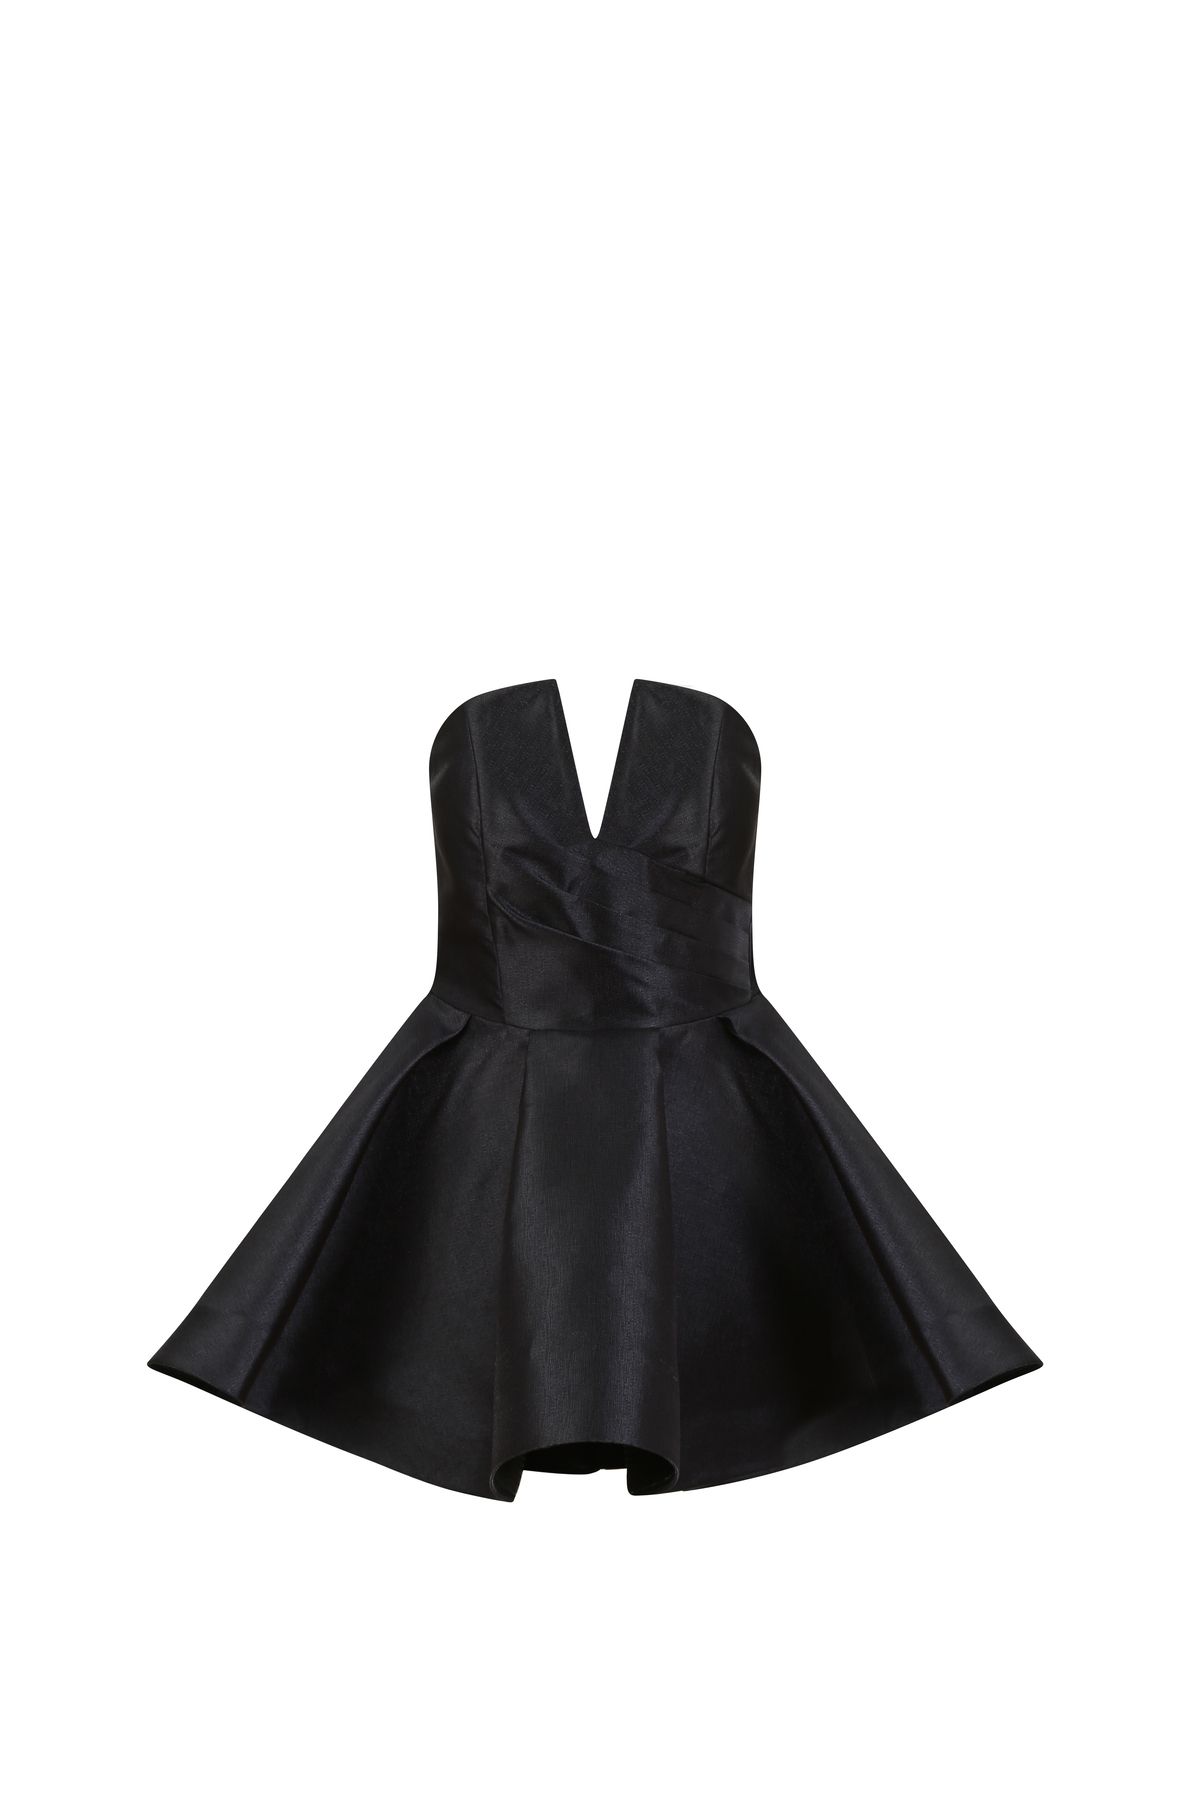 Rheme And Fons Özel Tasarım Couture El Işçiliği Siyah Dekolteli Mini Annabel Elbise